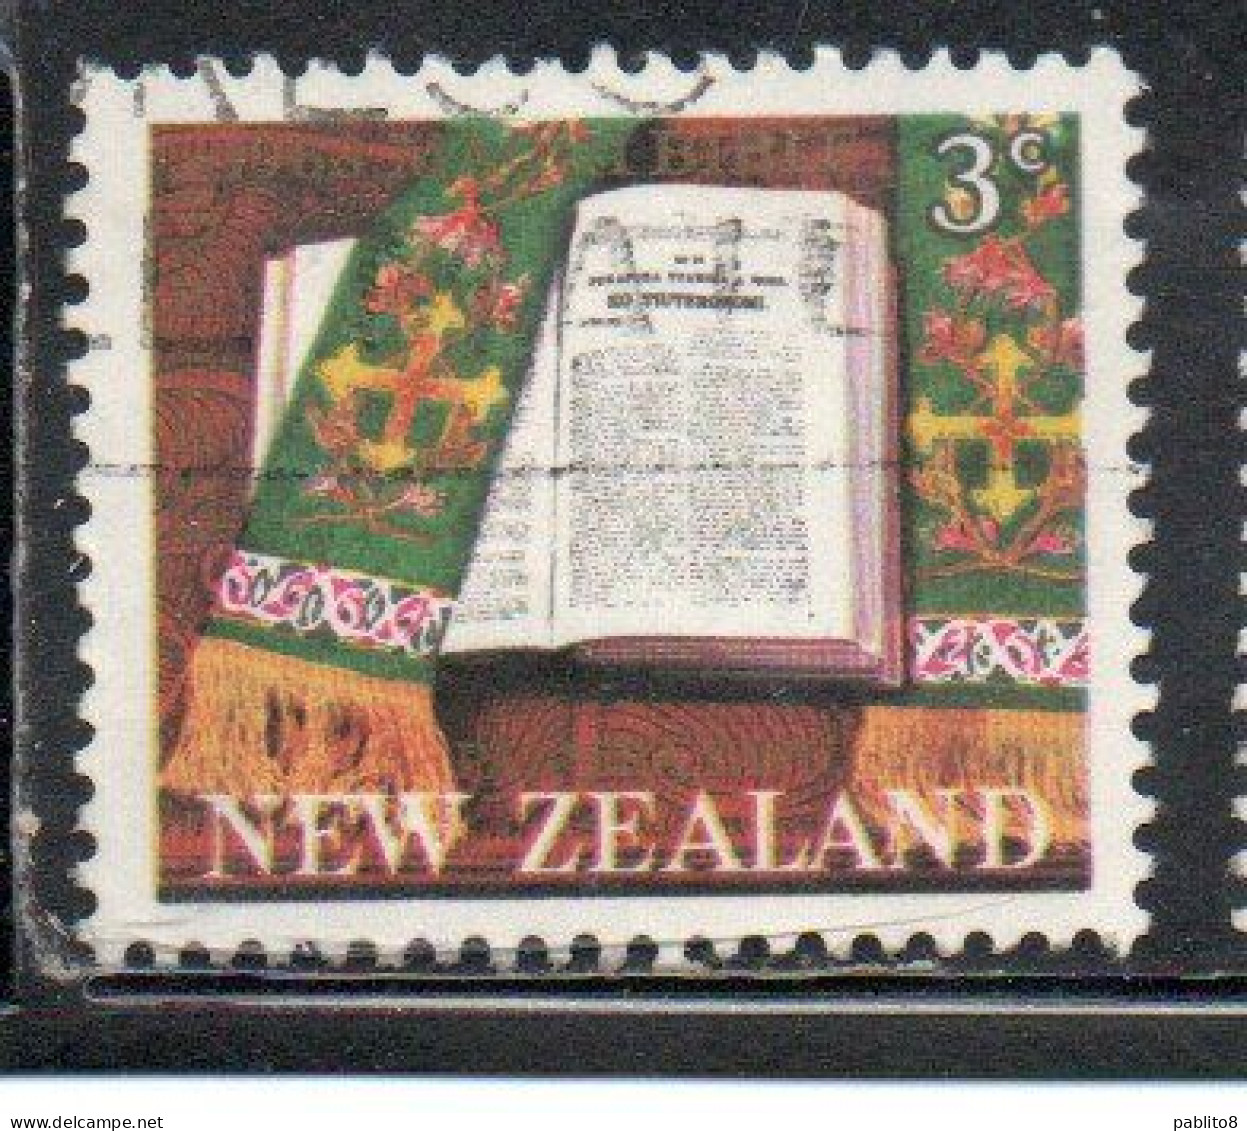 NEW ZEALAND NUOVA ZELANDA 1968 PUBLICATION OF THE BIBLE IN MAORI 3c USED USATO OBLITERE' - Used Stamps